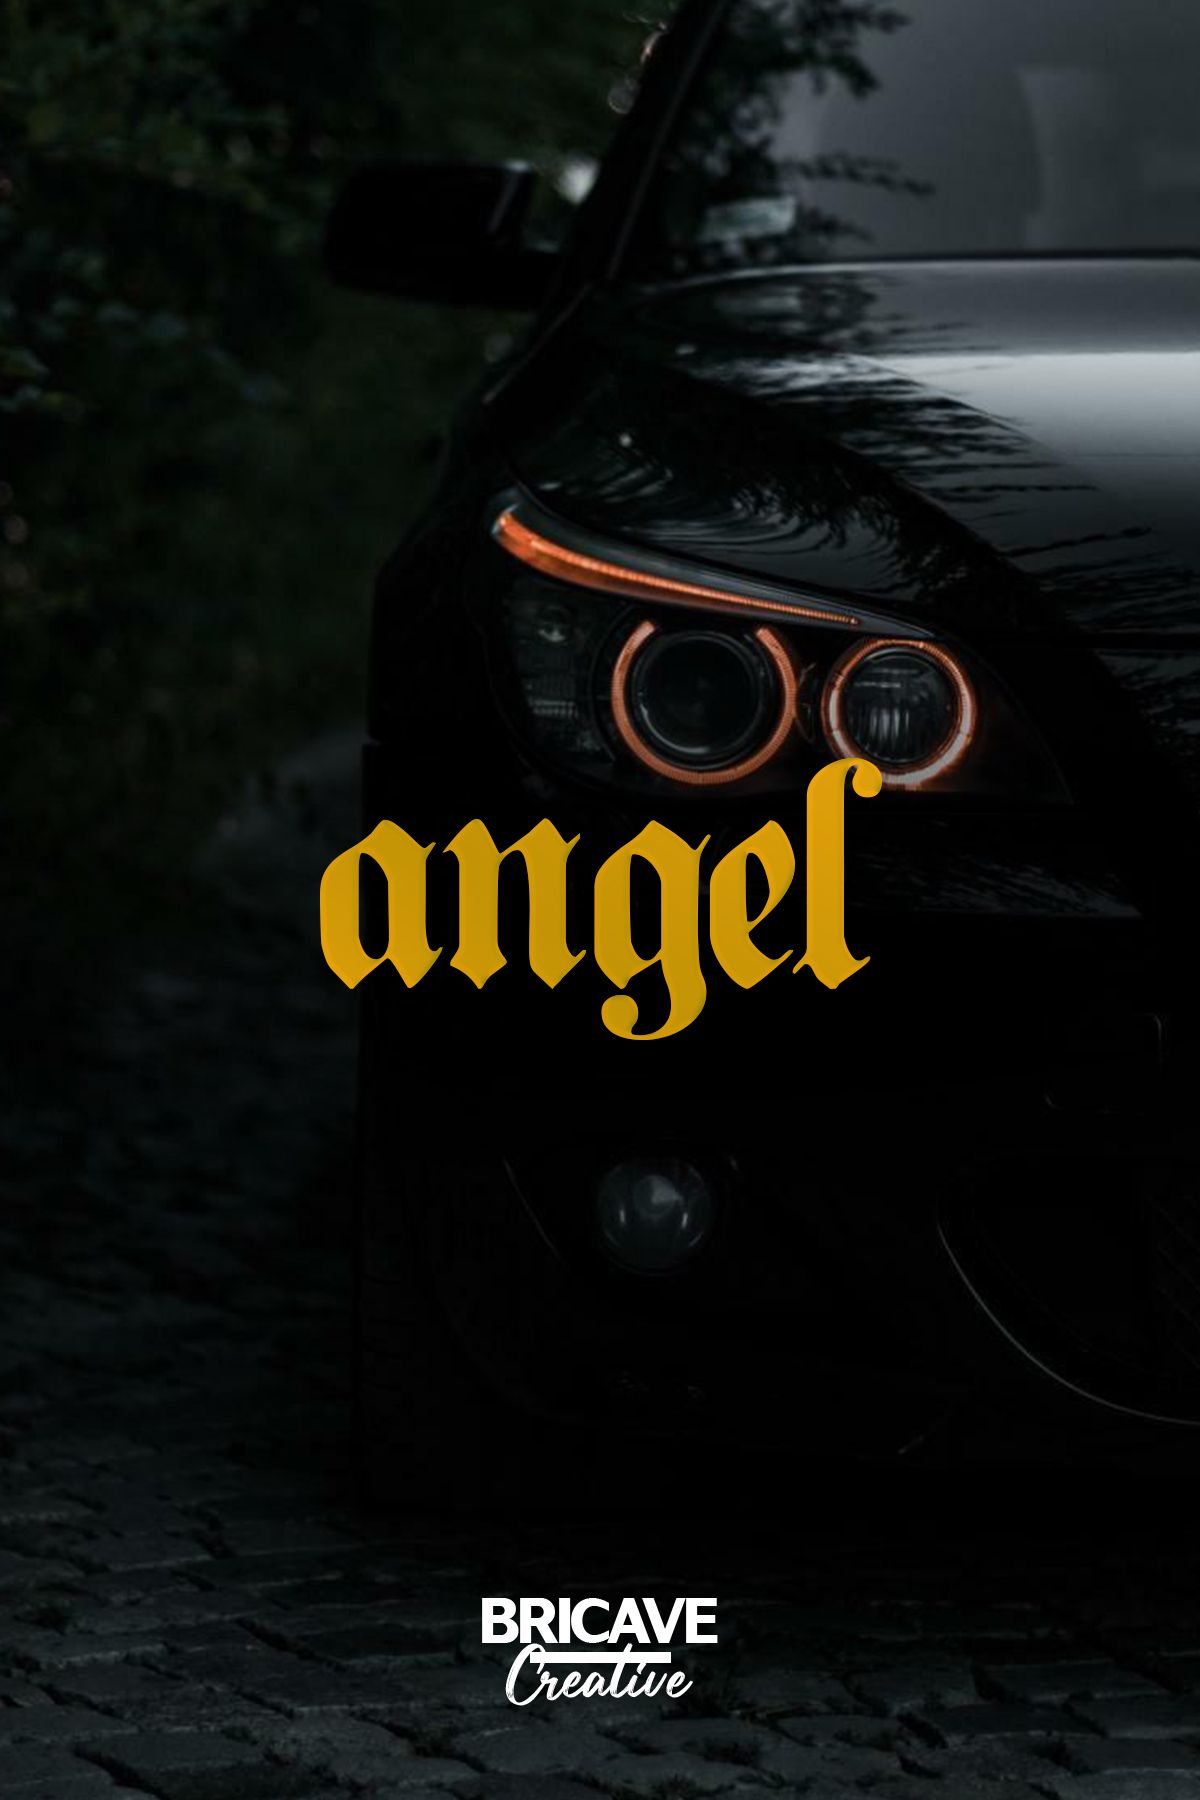 Bricave angel Melek Yazı JDM Araba-Motosiklet Cam Etiket Sticker 11,9x6cm